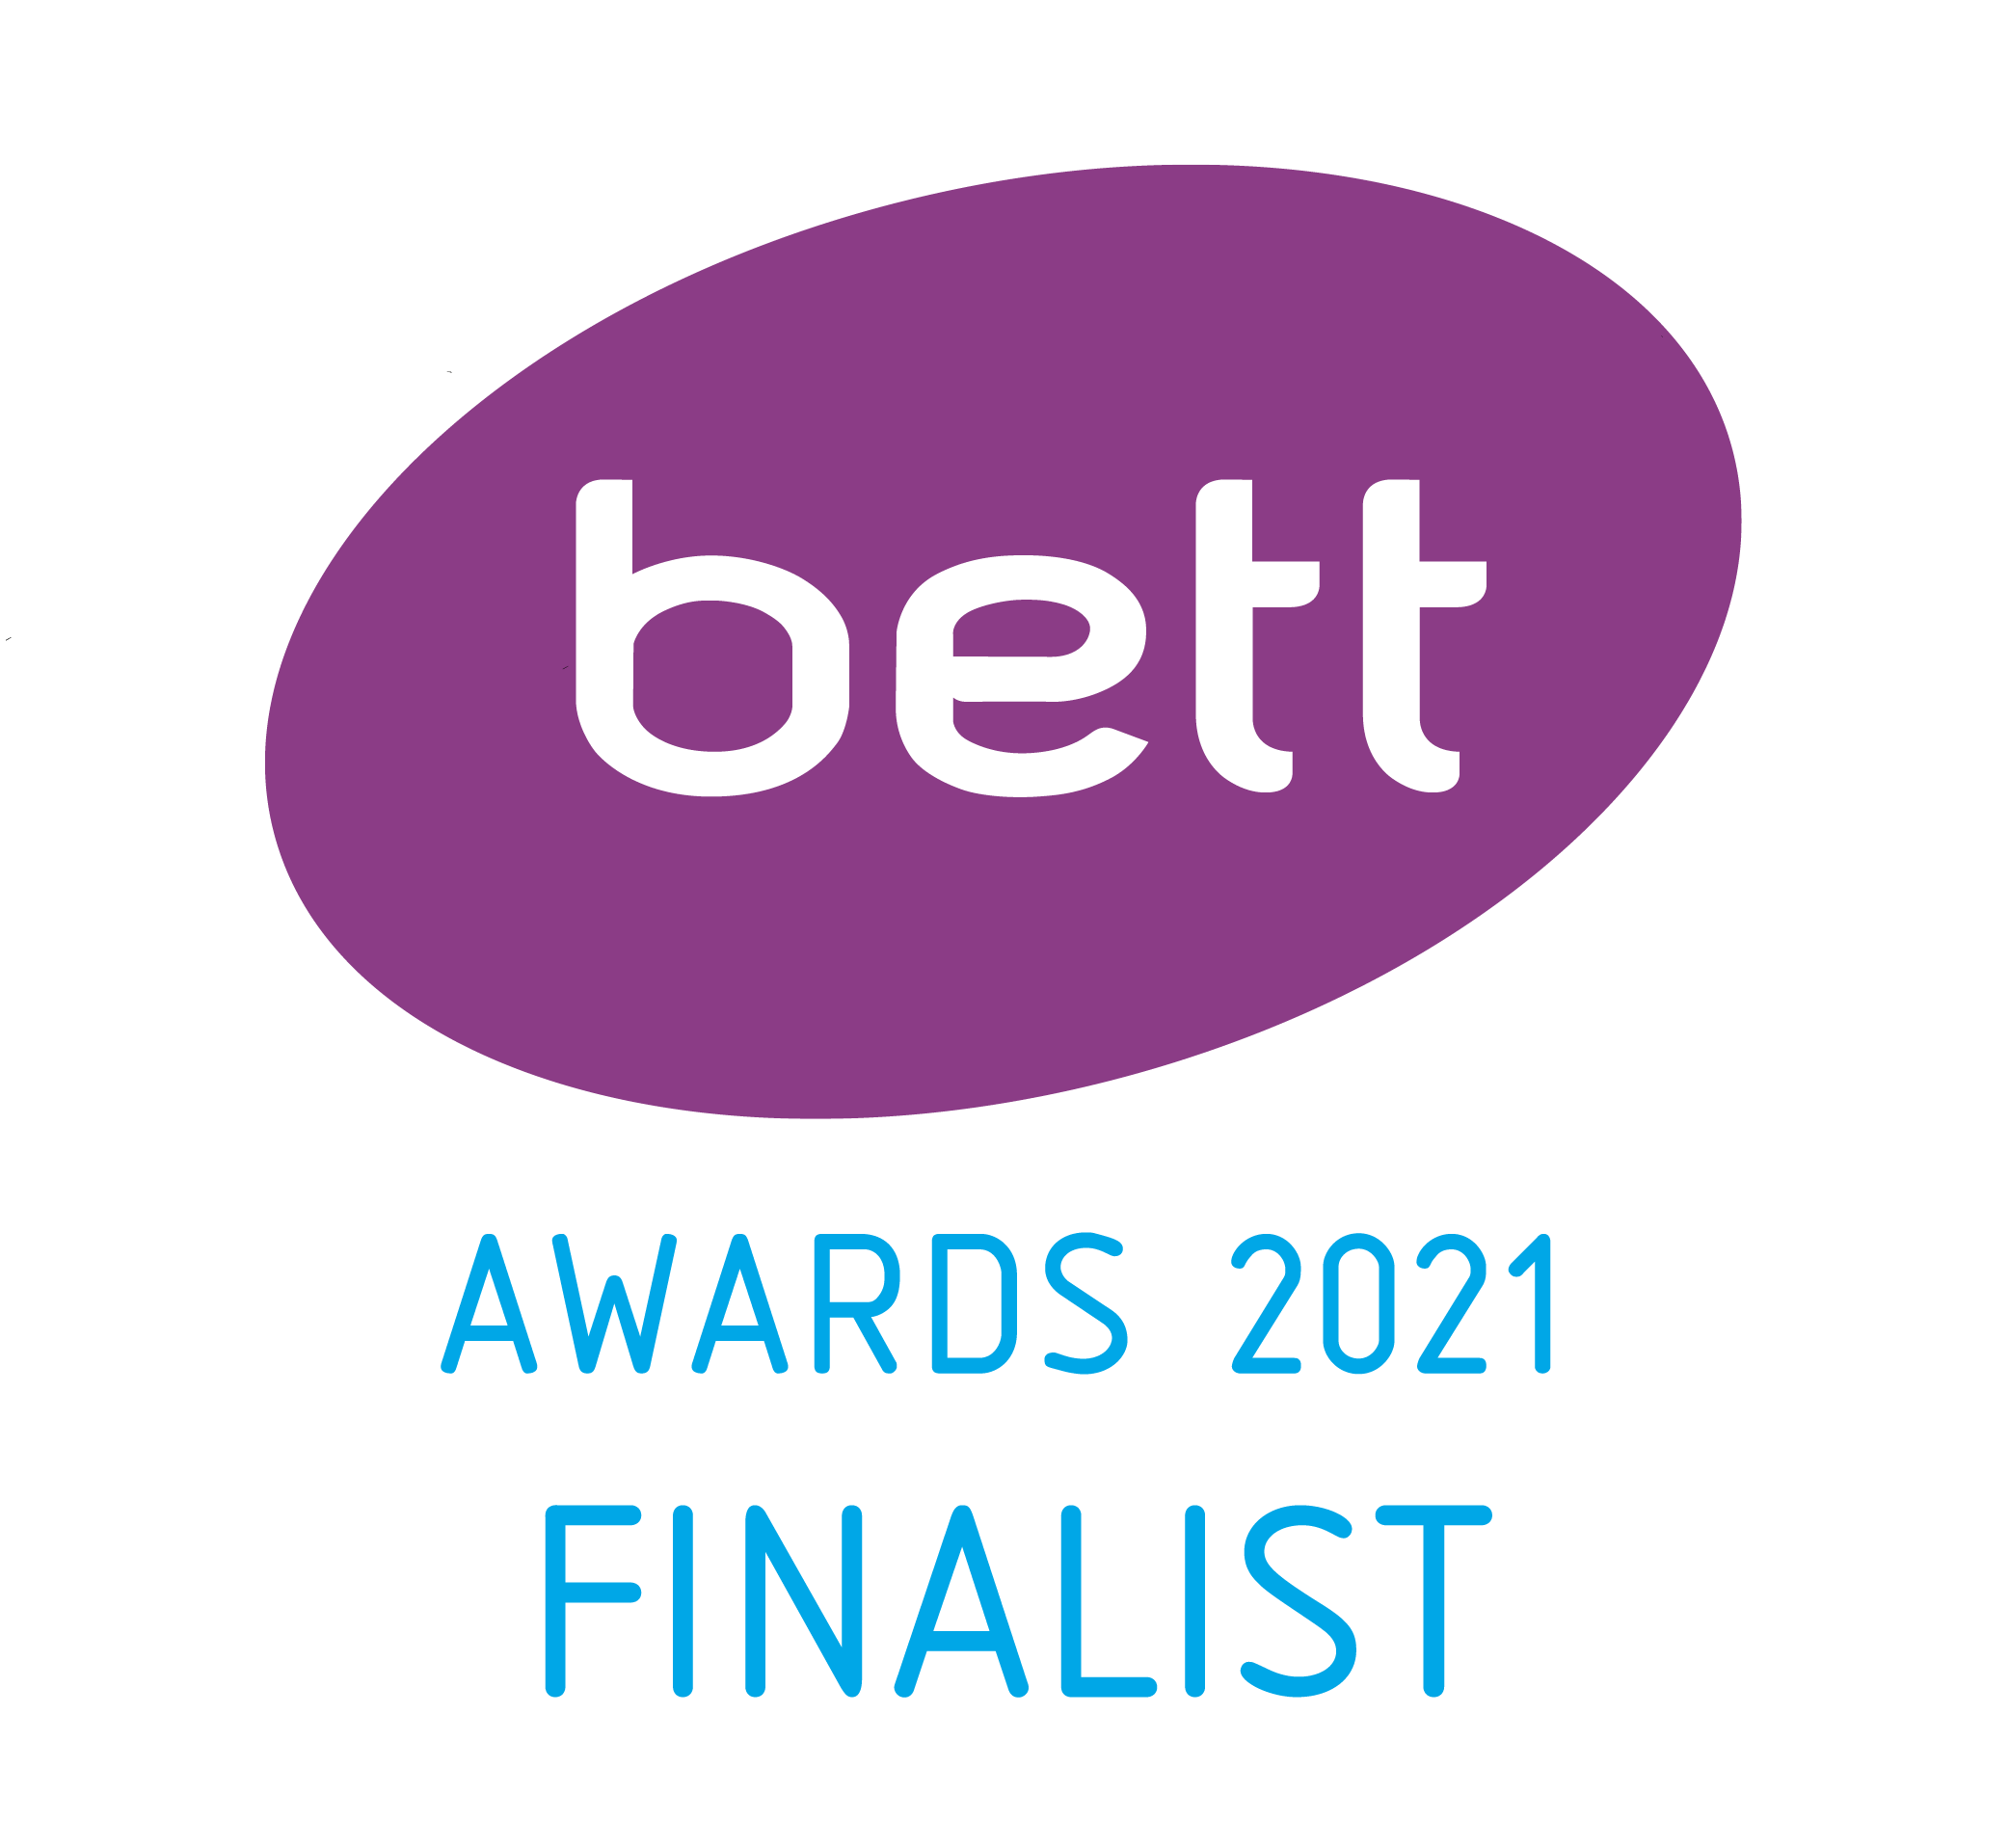 BETT Awards 2021 finalist